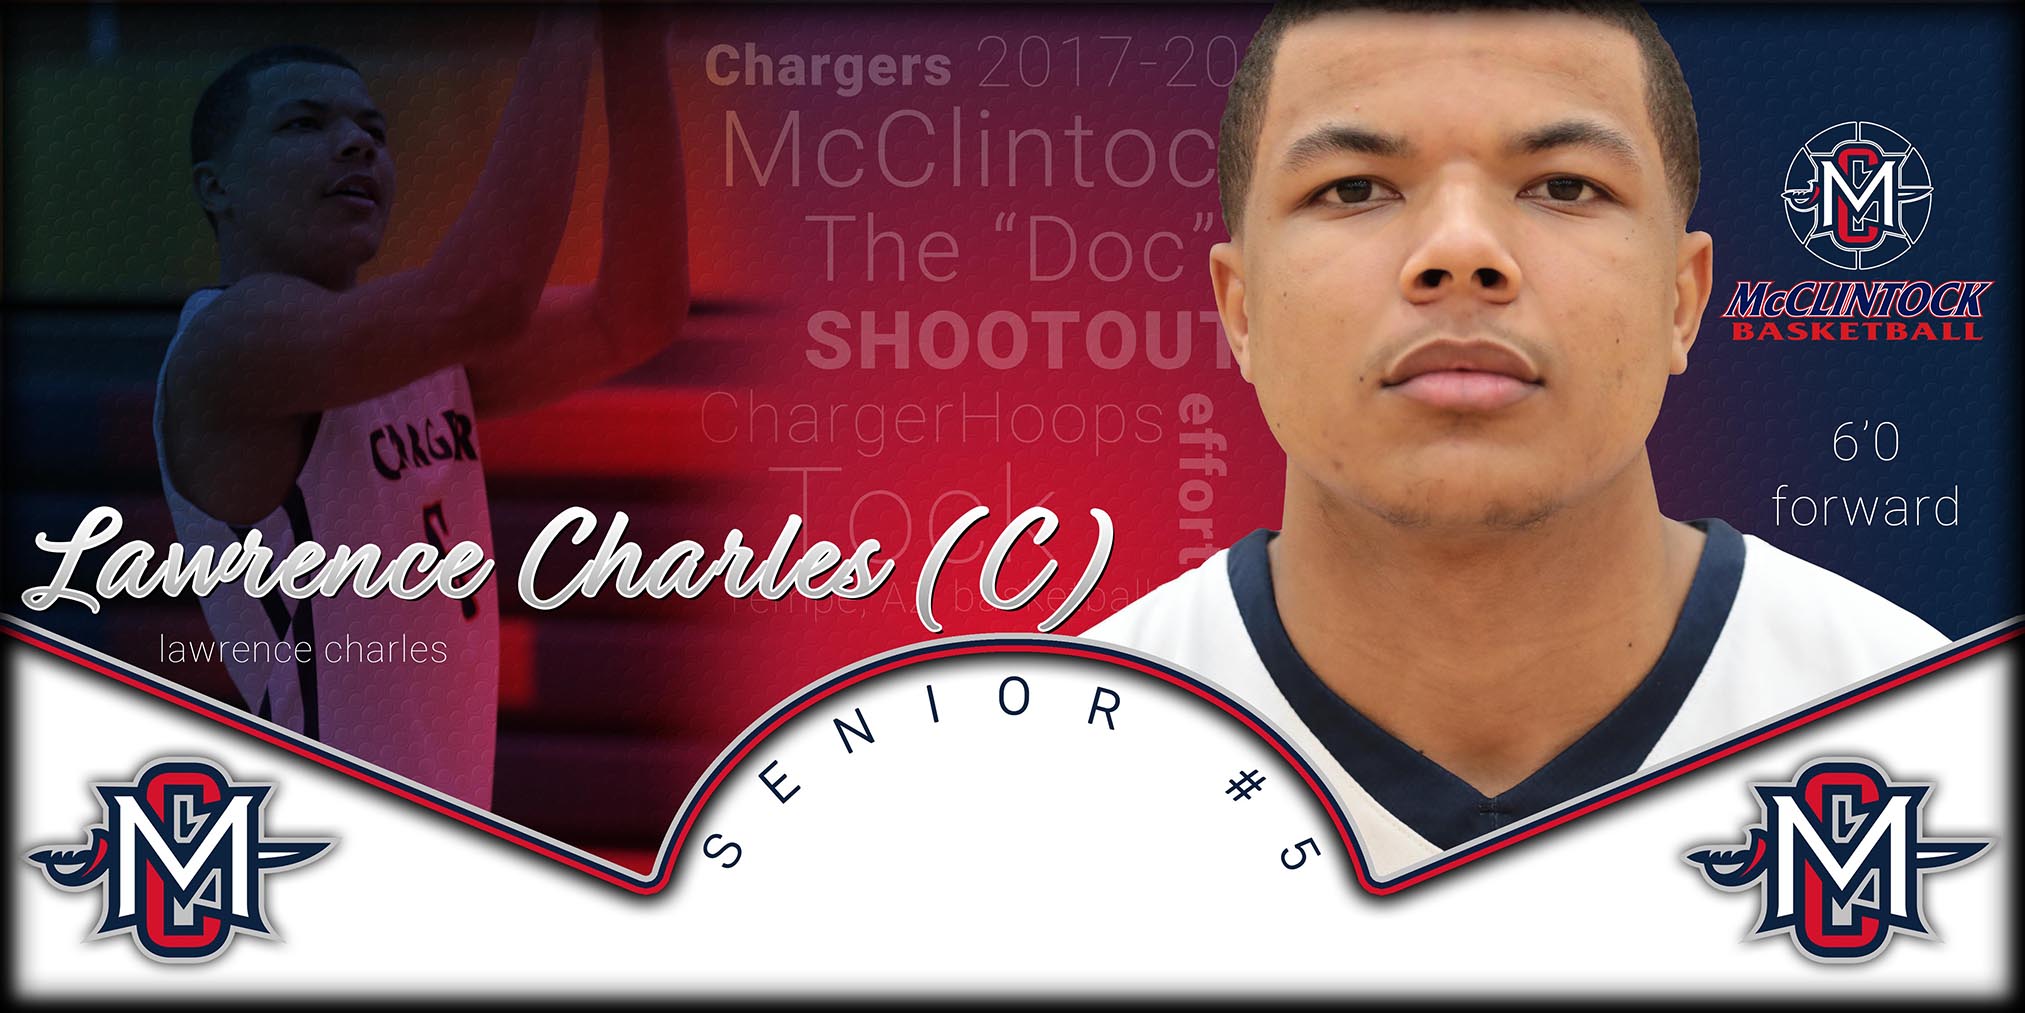 McClintock Chargers Basketball- Lawrence Charles